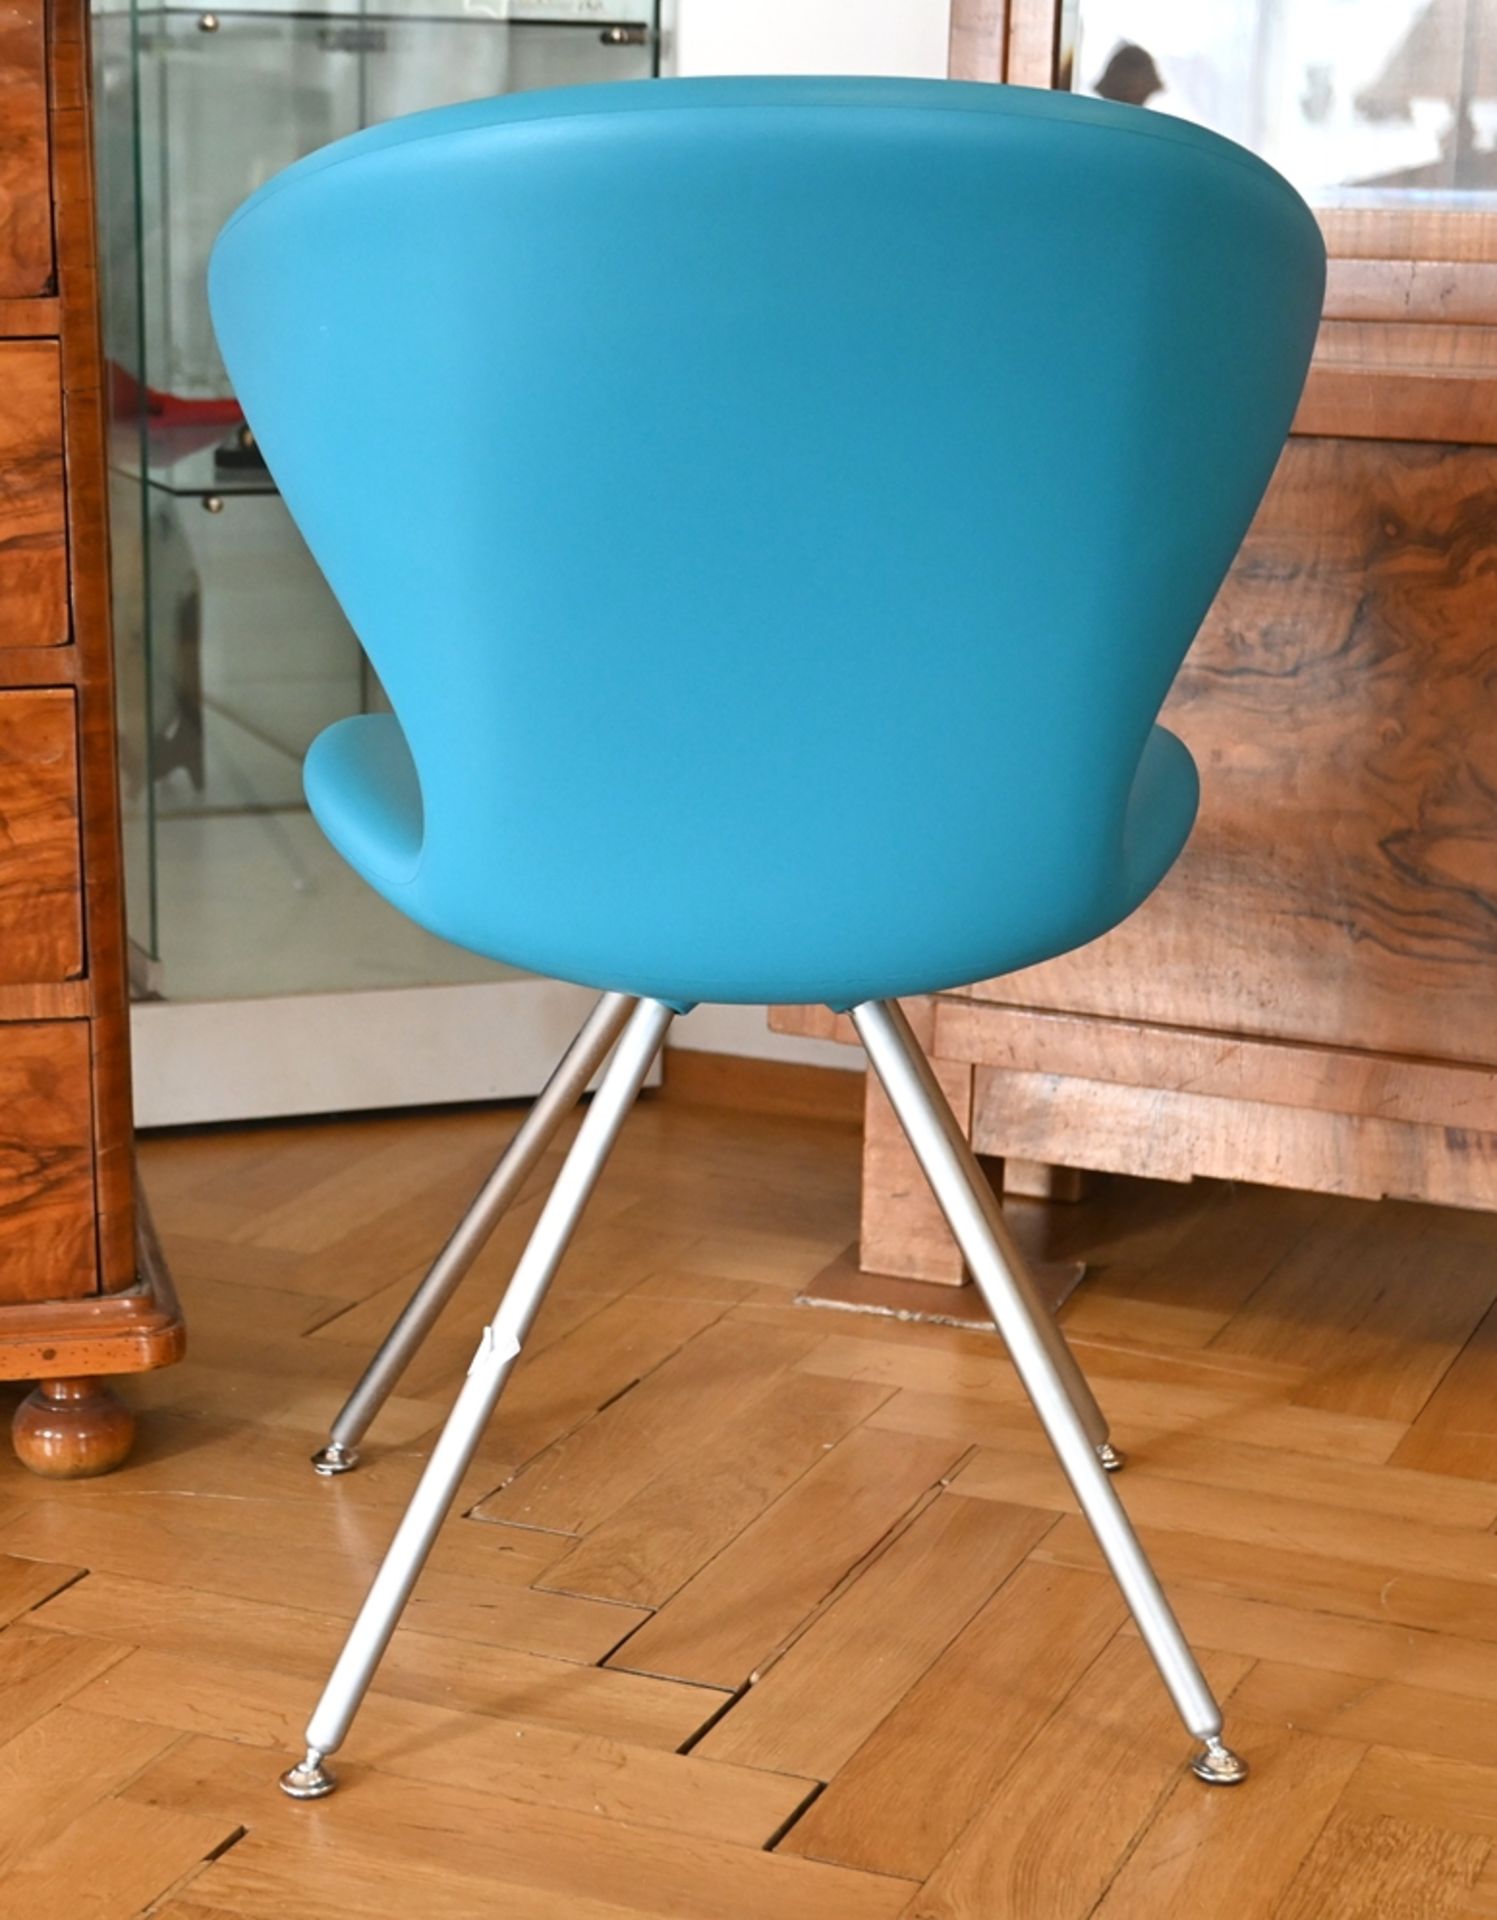 Design chair, Tonon Concept 902 with metal feet, curved shape, design Martin Ballendat (1958 Bochum - Image 3 of 4